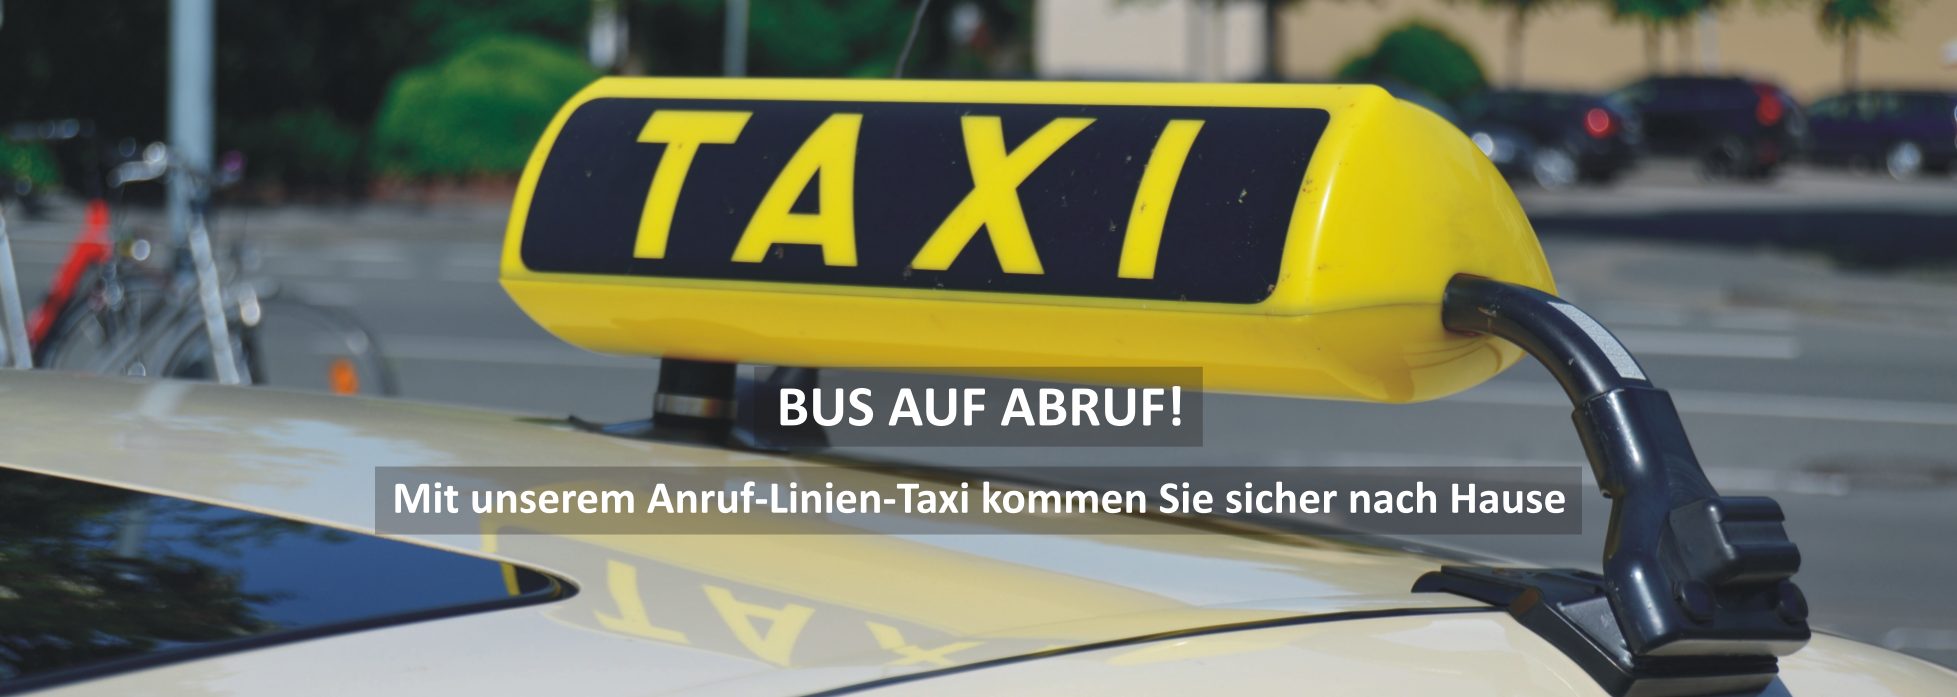 04-anruf-linien-taxi.jpg